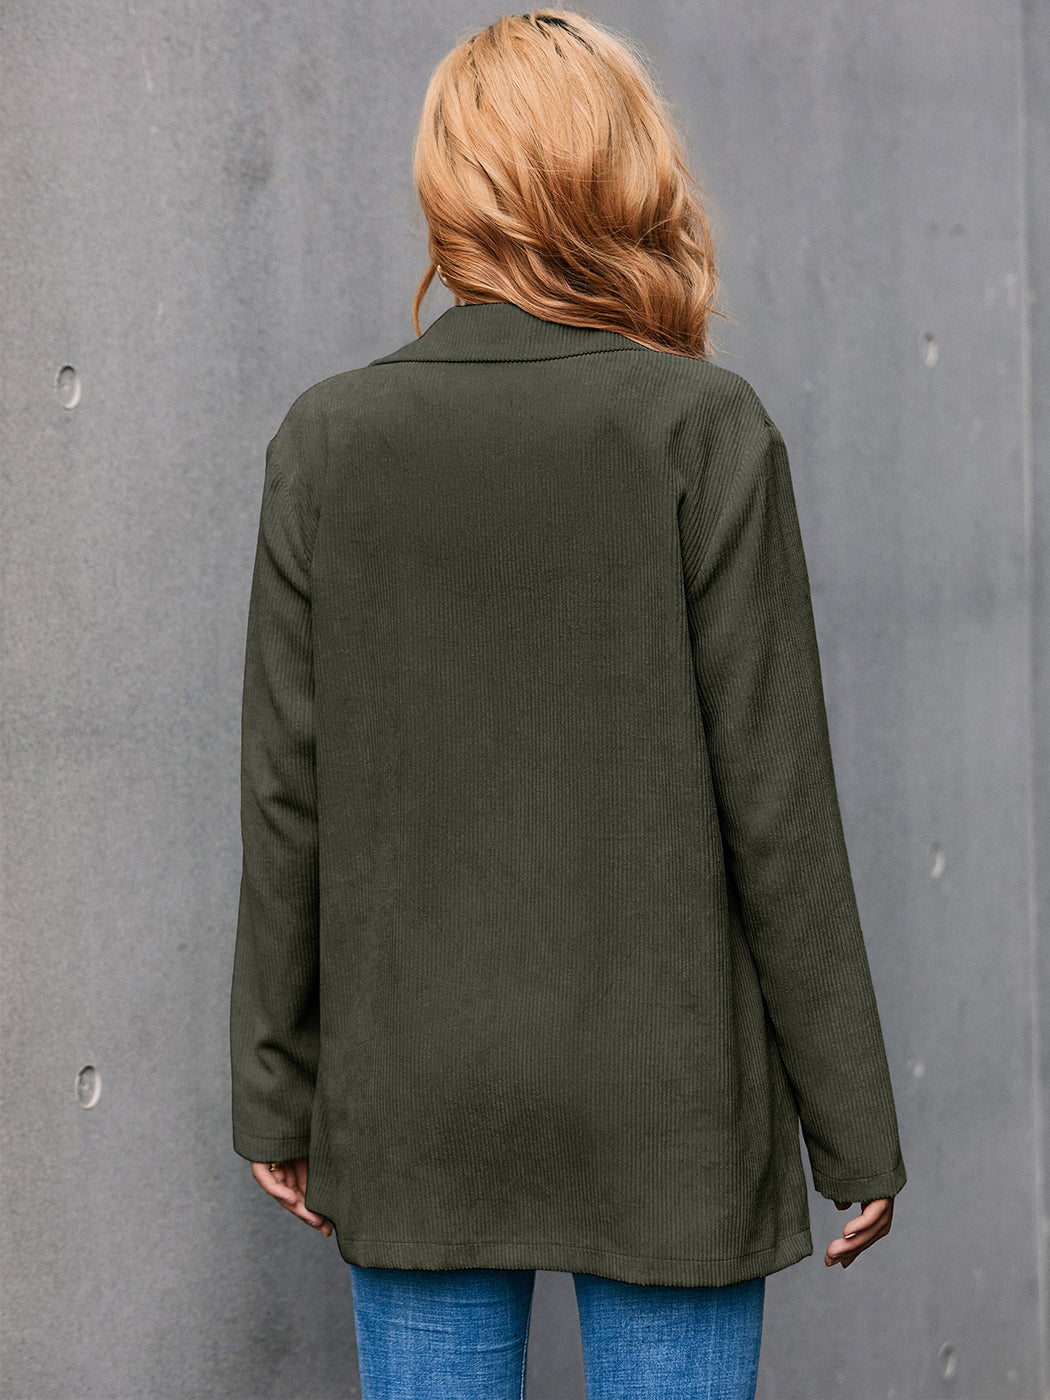 Anna-Kaci Women's Casual Loose Long Sleeve Lapel Button Corduroy Blazer Jacket